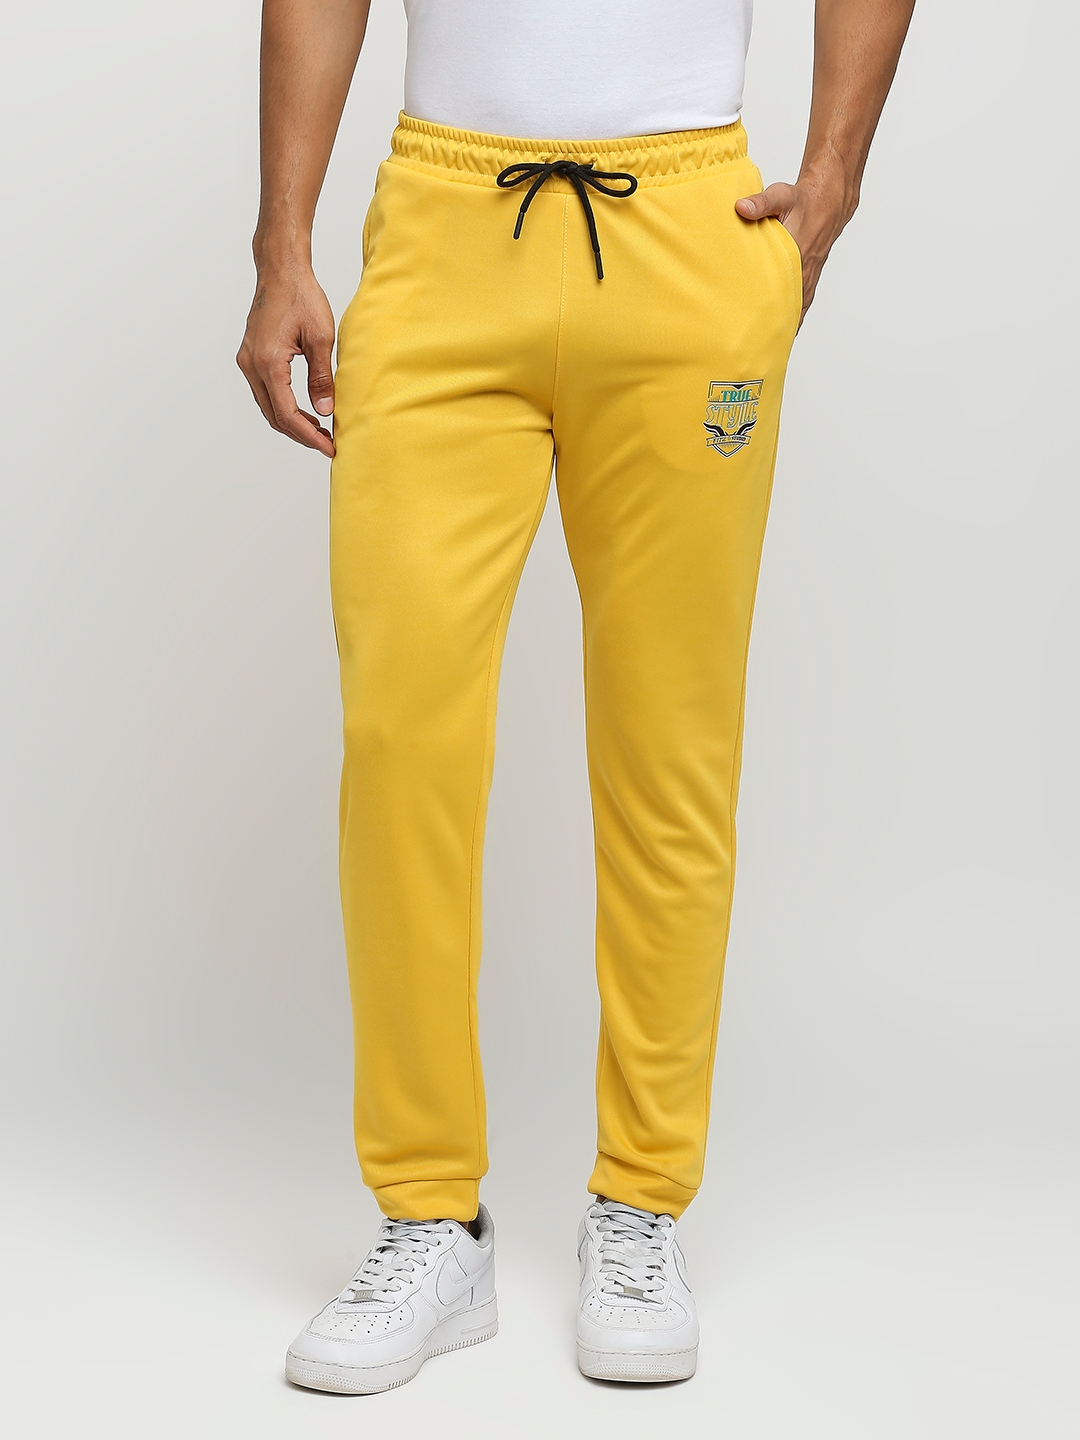 FITZ | Men's Slim Fit Yellow Cotton Blend Casual Joogers